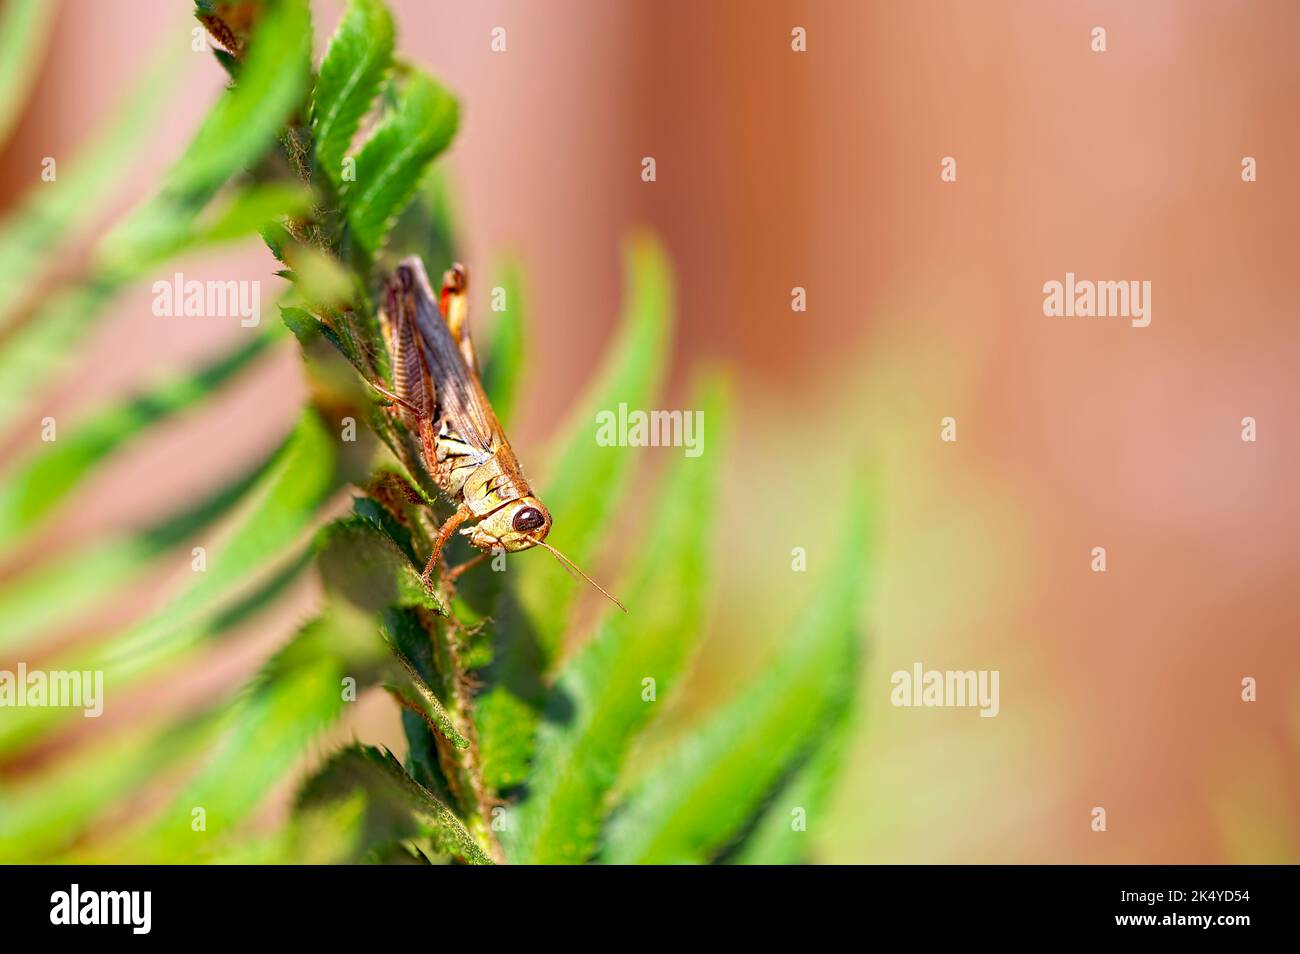 Red-legged Grasshopper (Melanoplus femurrubrum) on a fern frond with copy space. Stock Photo